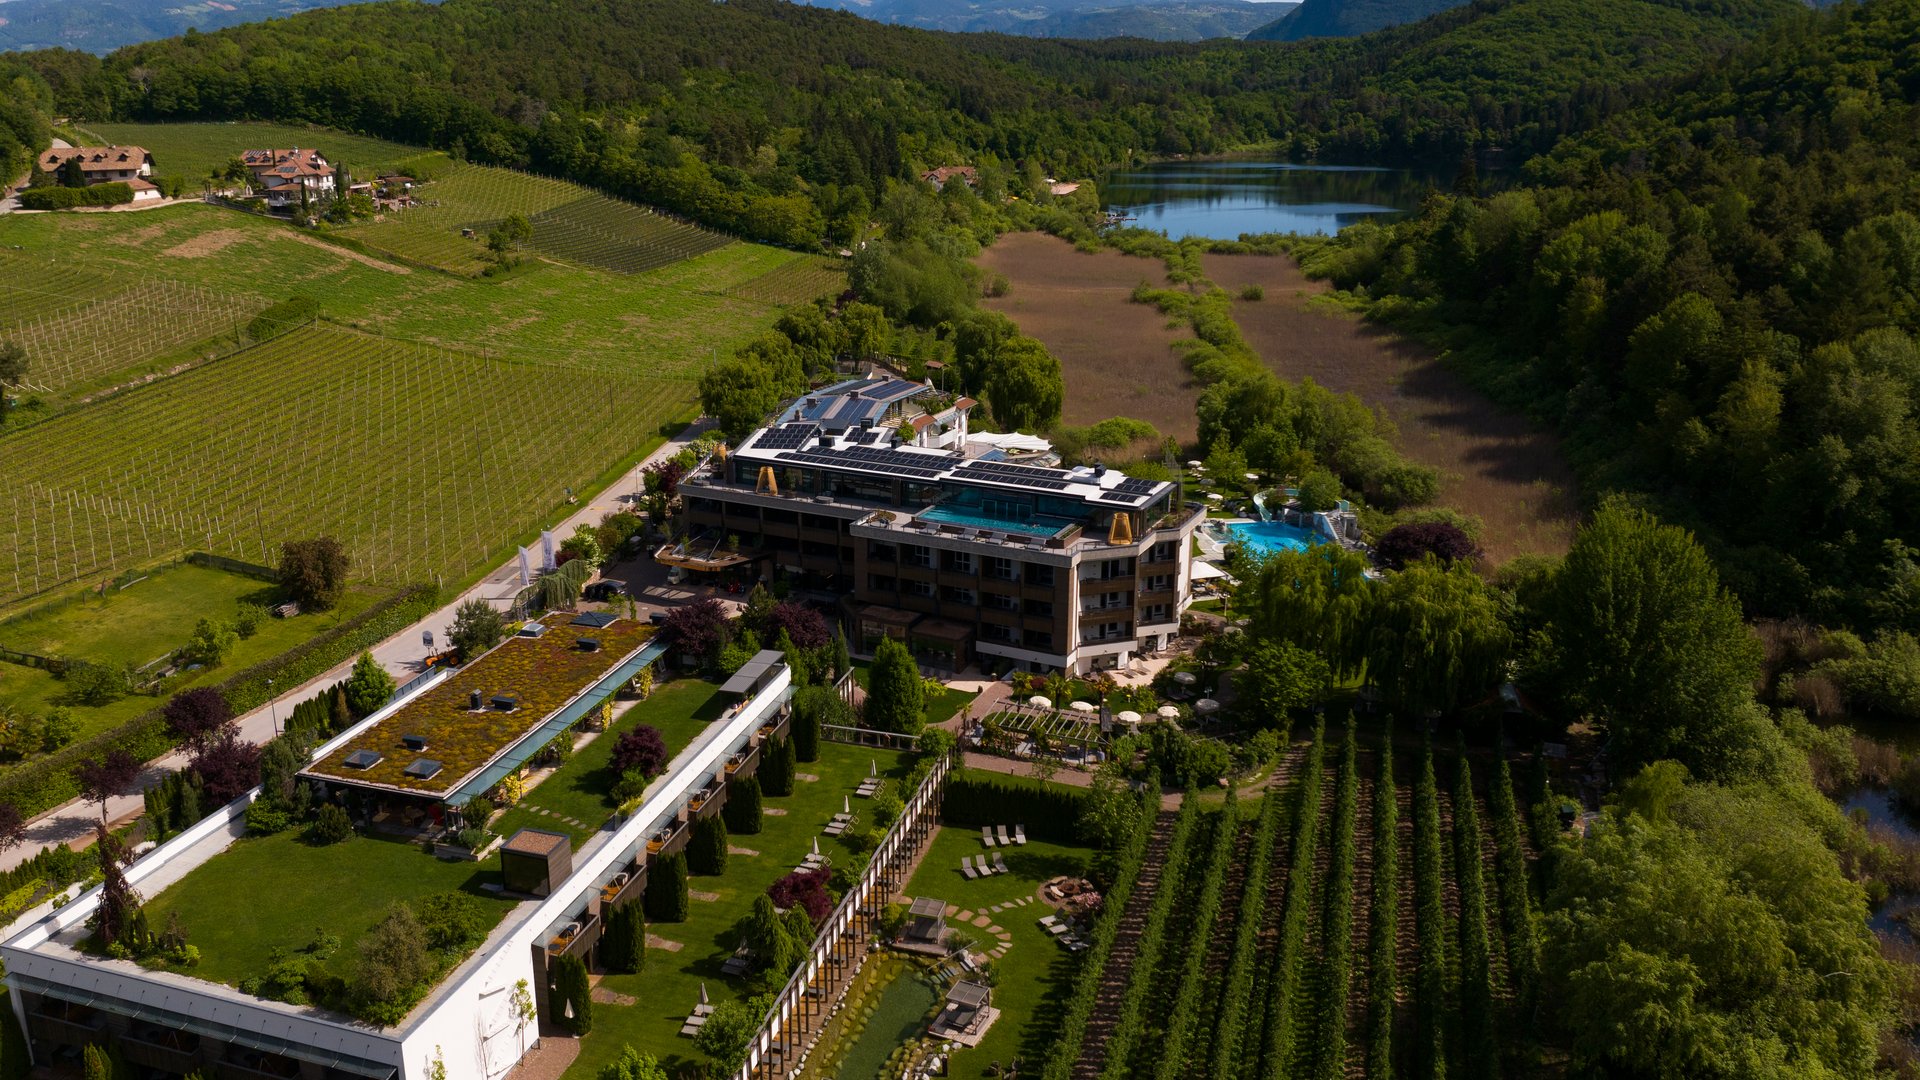 Hotels near Lago di Caldaro with 4-star superior service